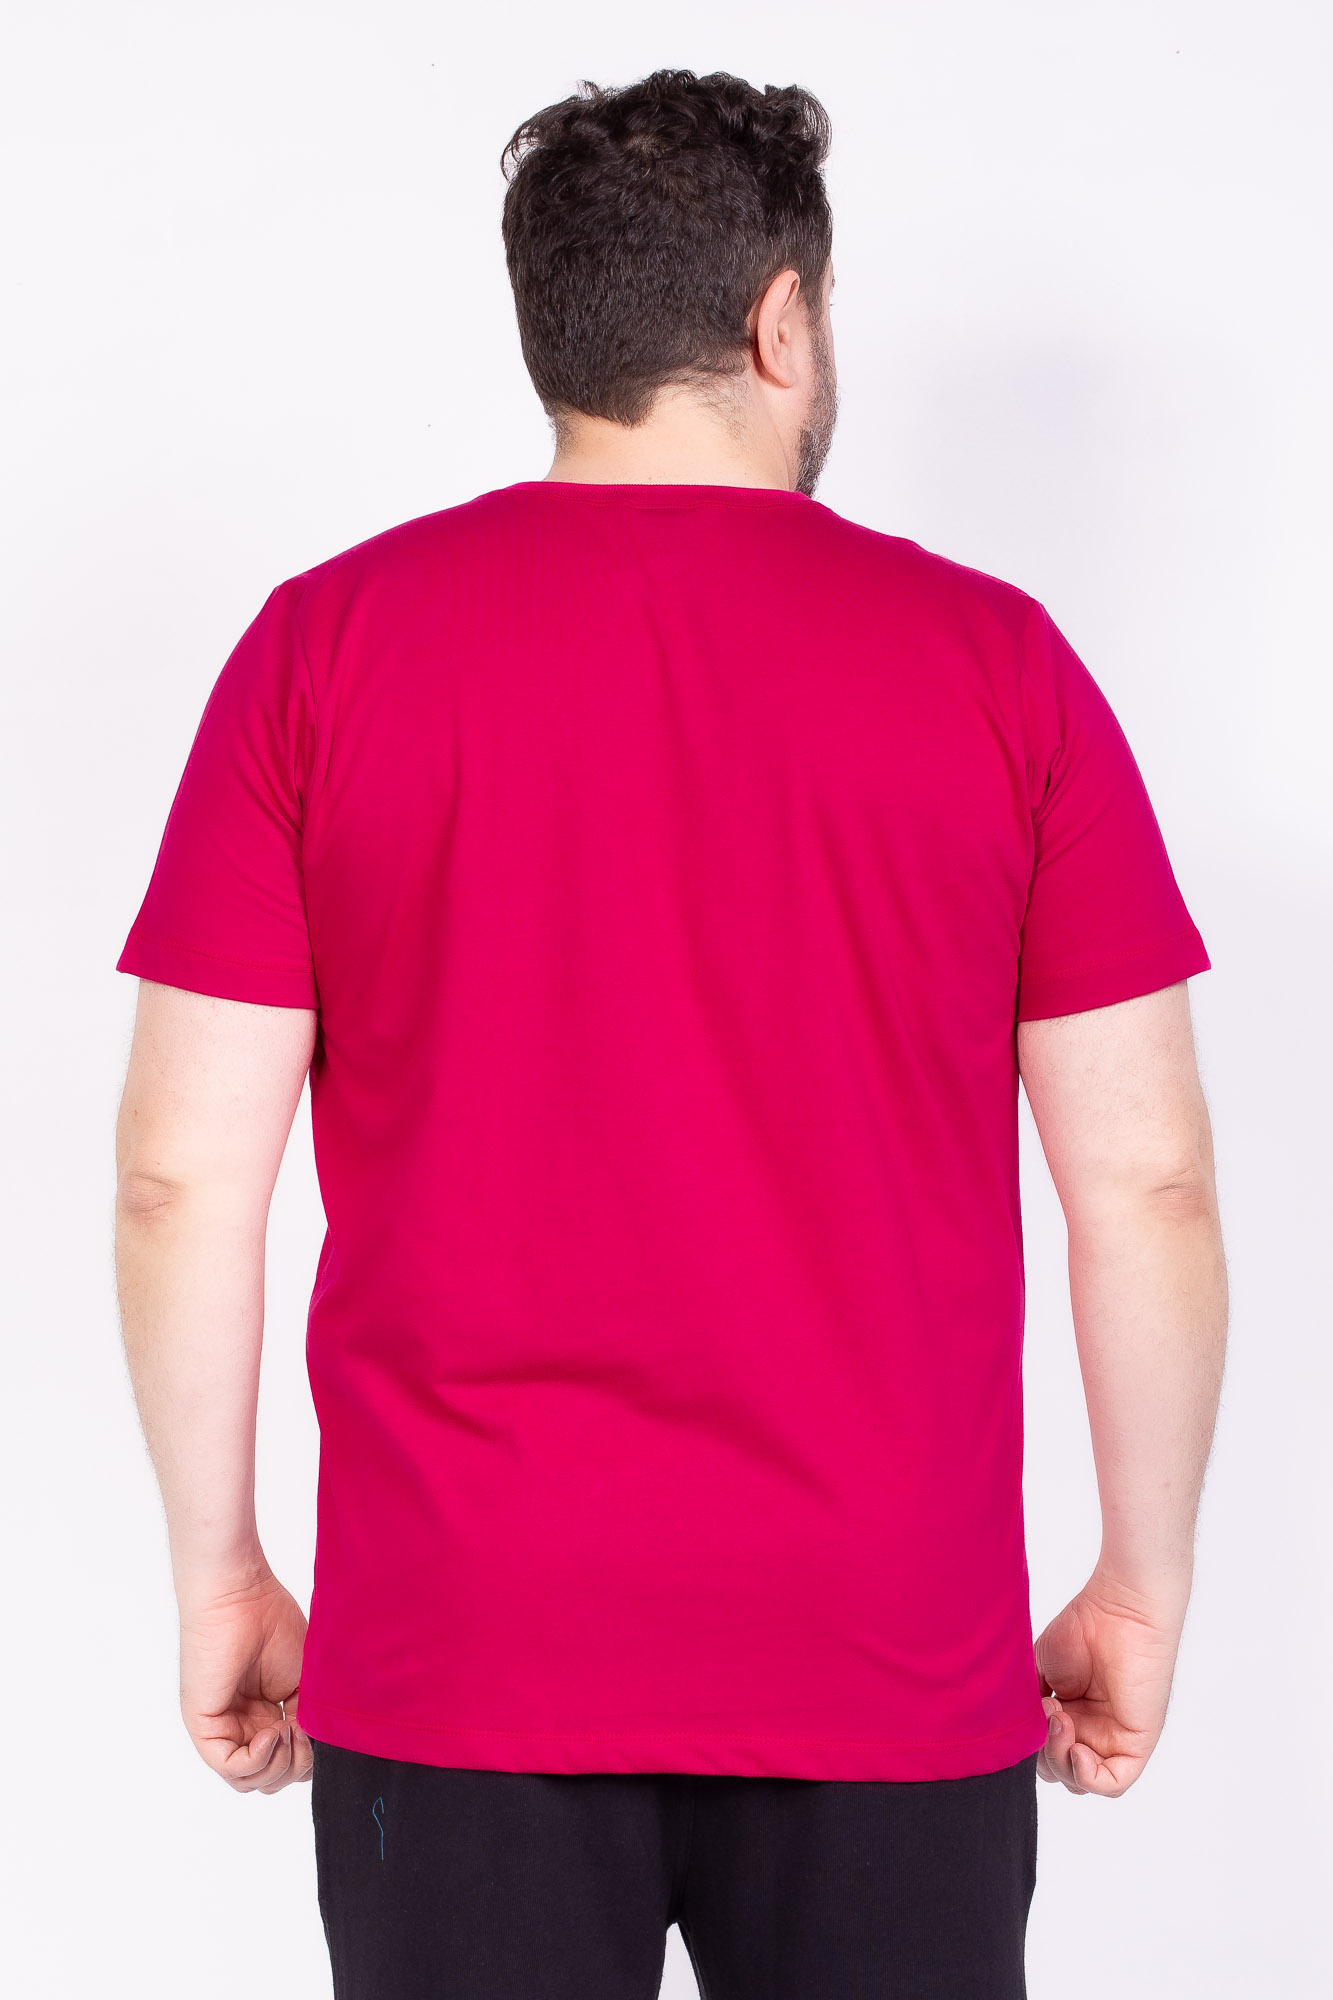 Camiseta Básica 100% algodão rosa dark Plus size